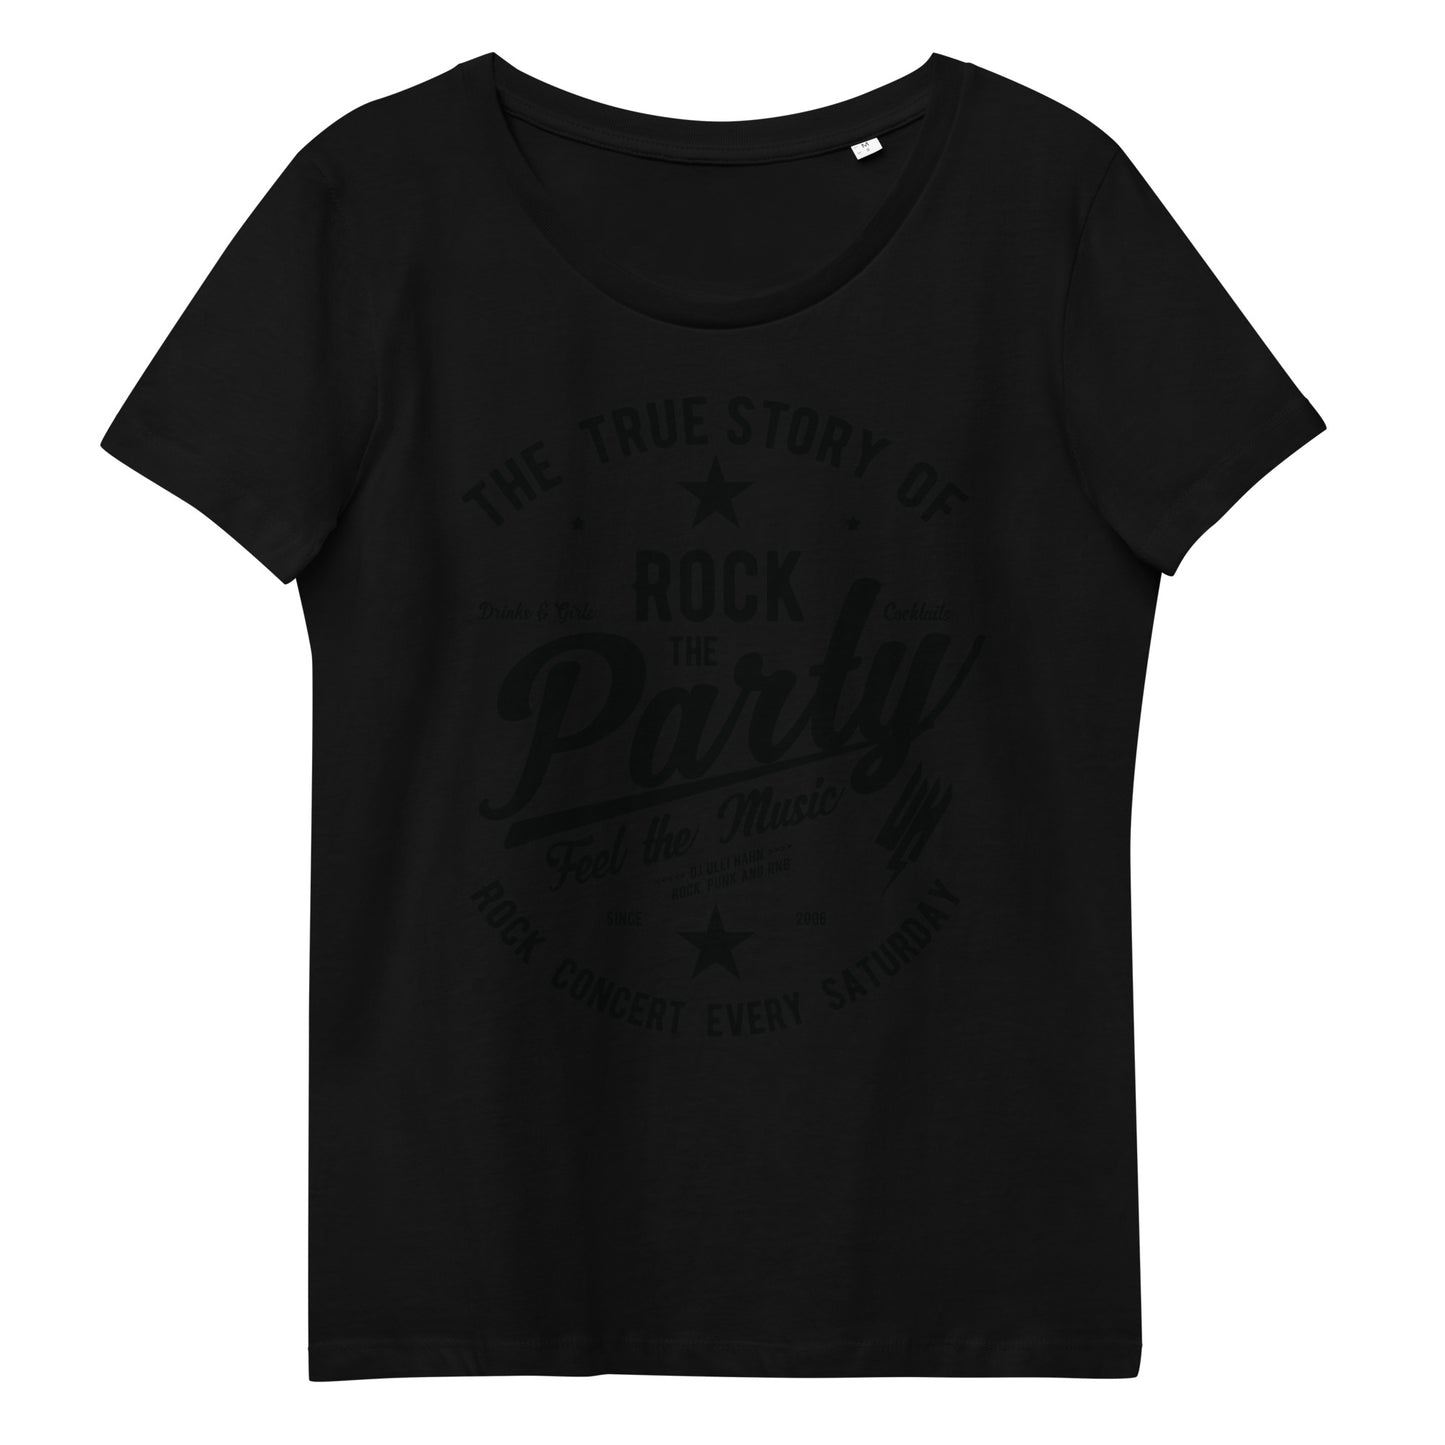 Ulli Hahn Women's T-Shirt Rock the Party black